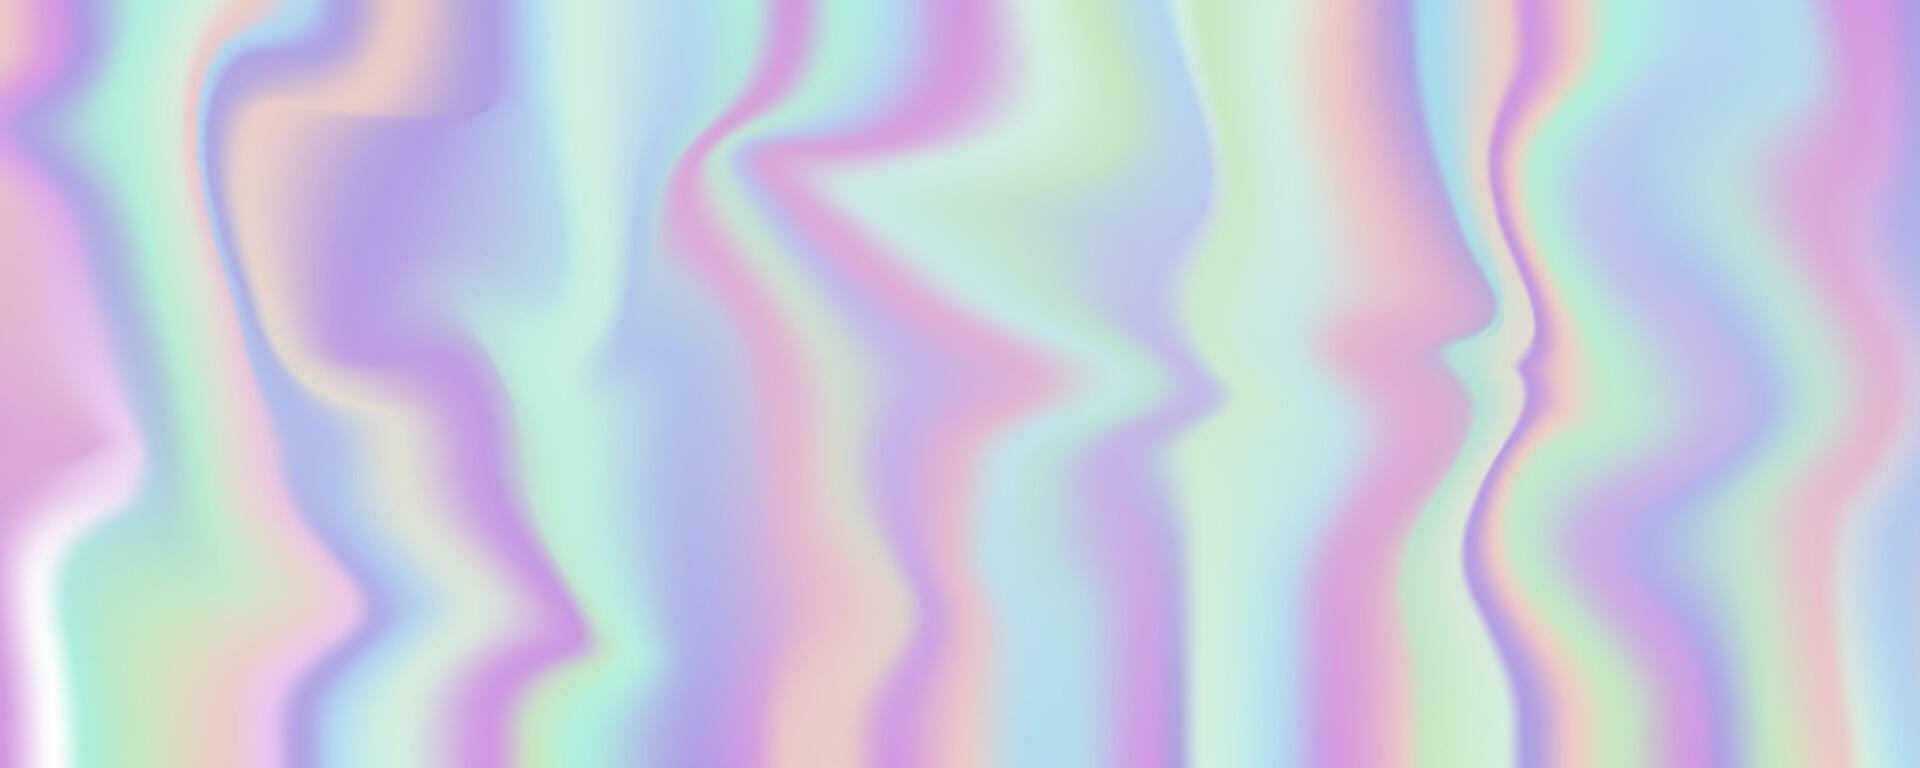 holograma textura fundo. iridescente listrado gradiente. néon arco Iris pastel frustrar. unicórnio pérola papel de parede. vetor